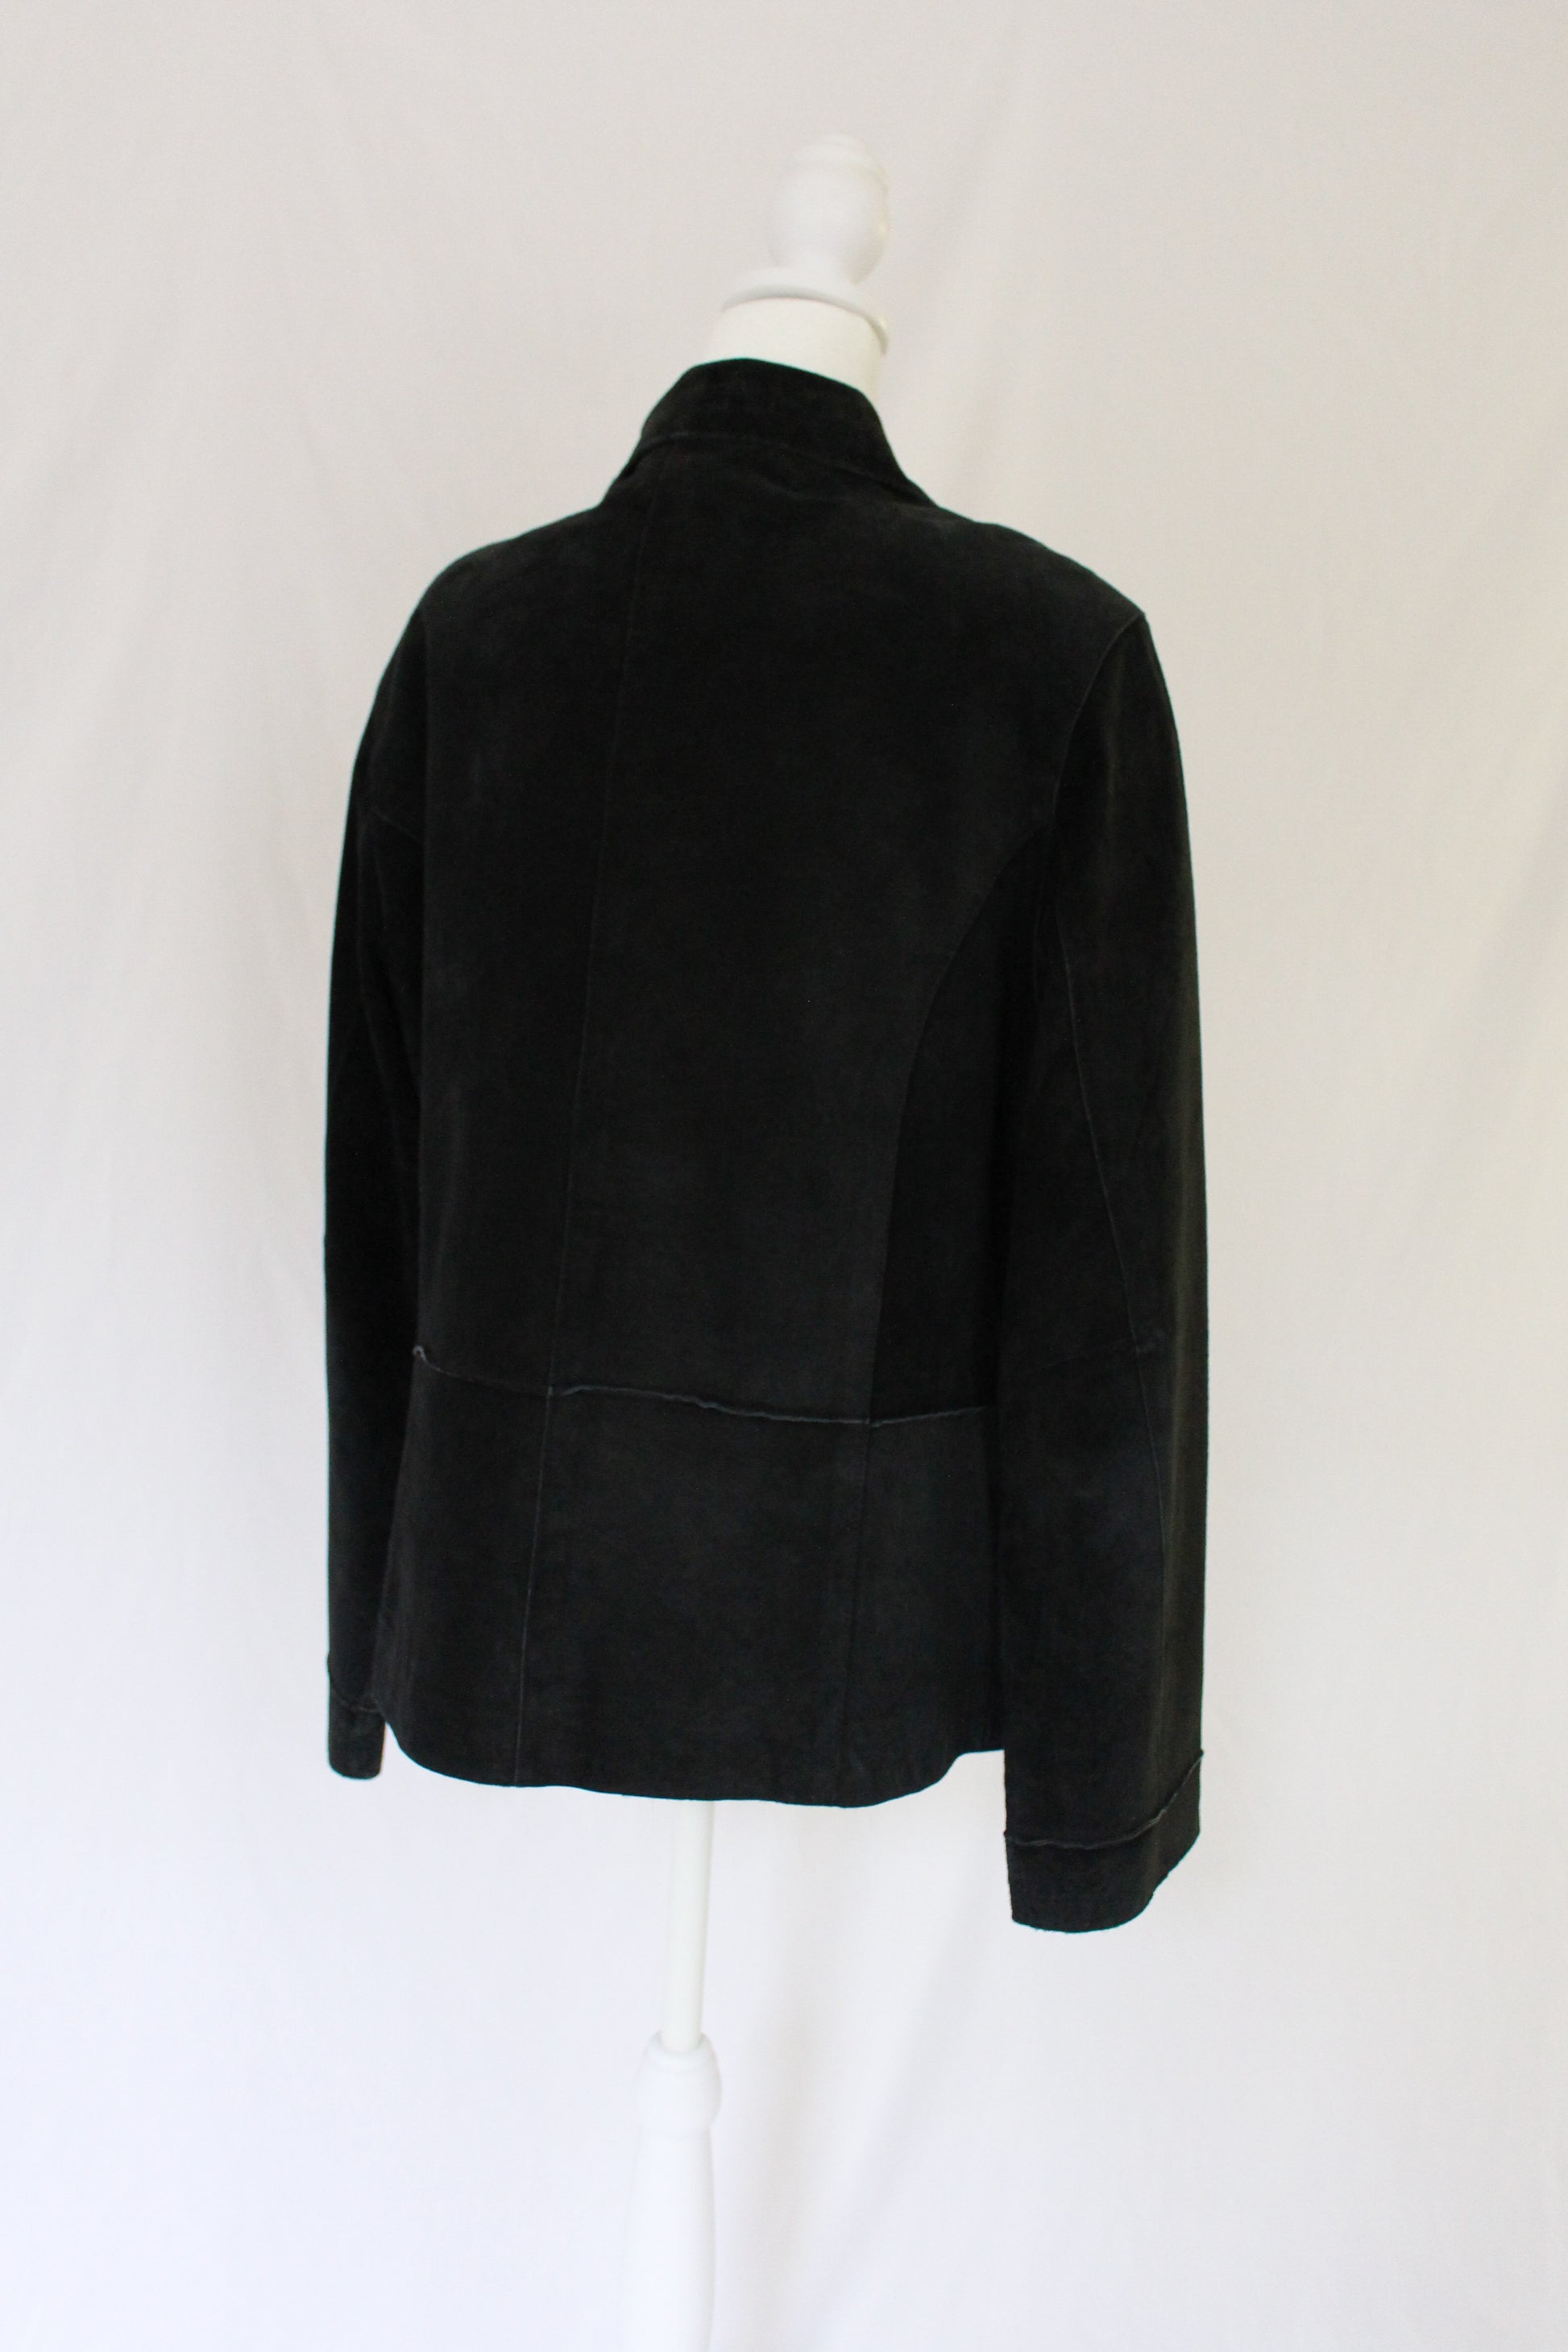 black leather suede jacket